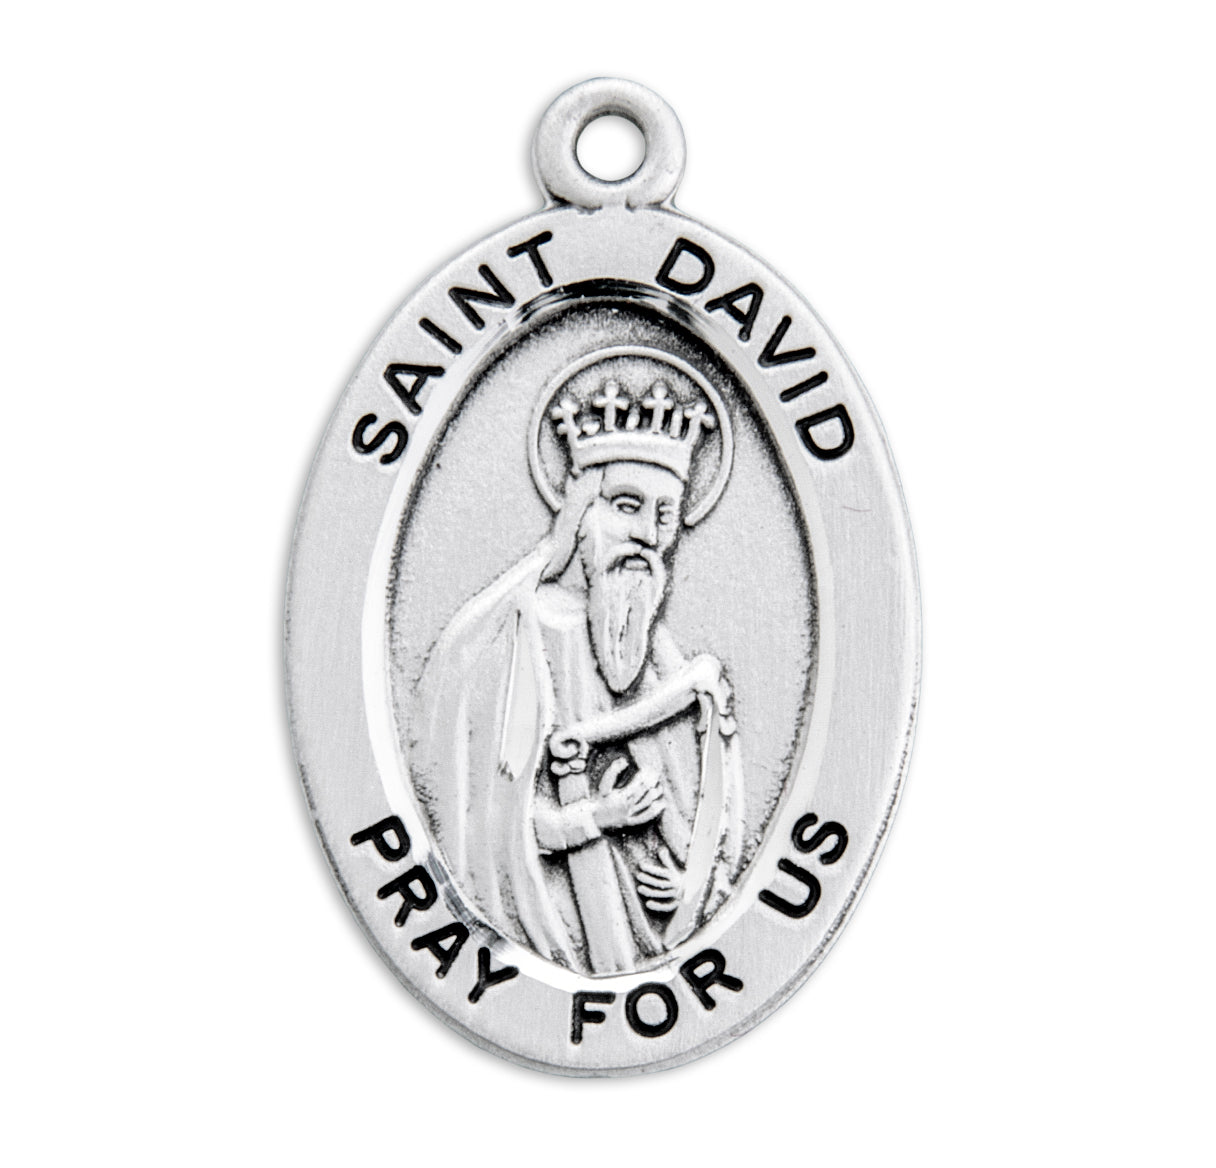 St. David Sterling Silver Medal Necklace